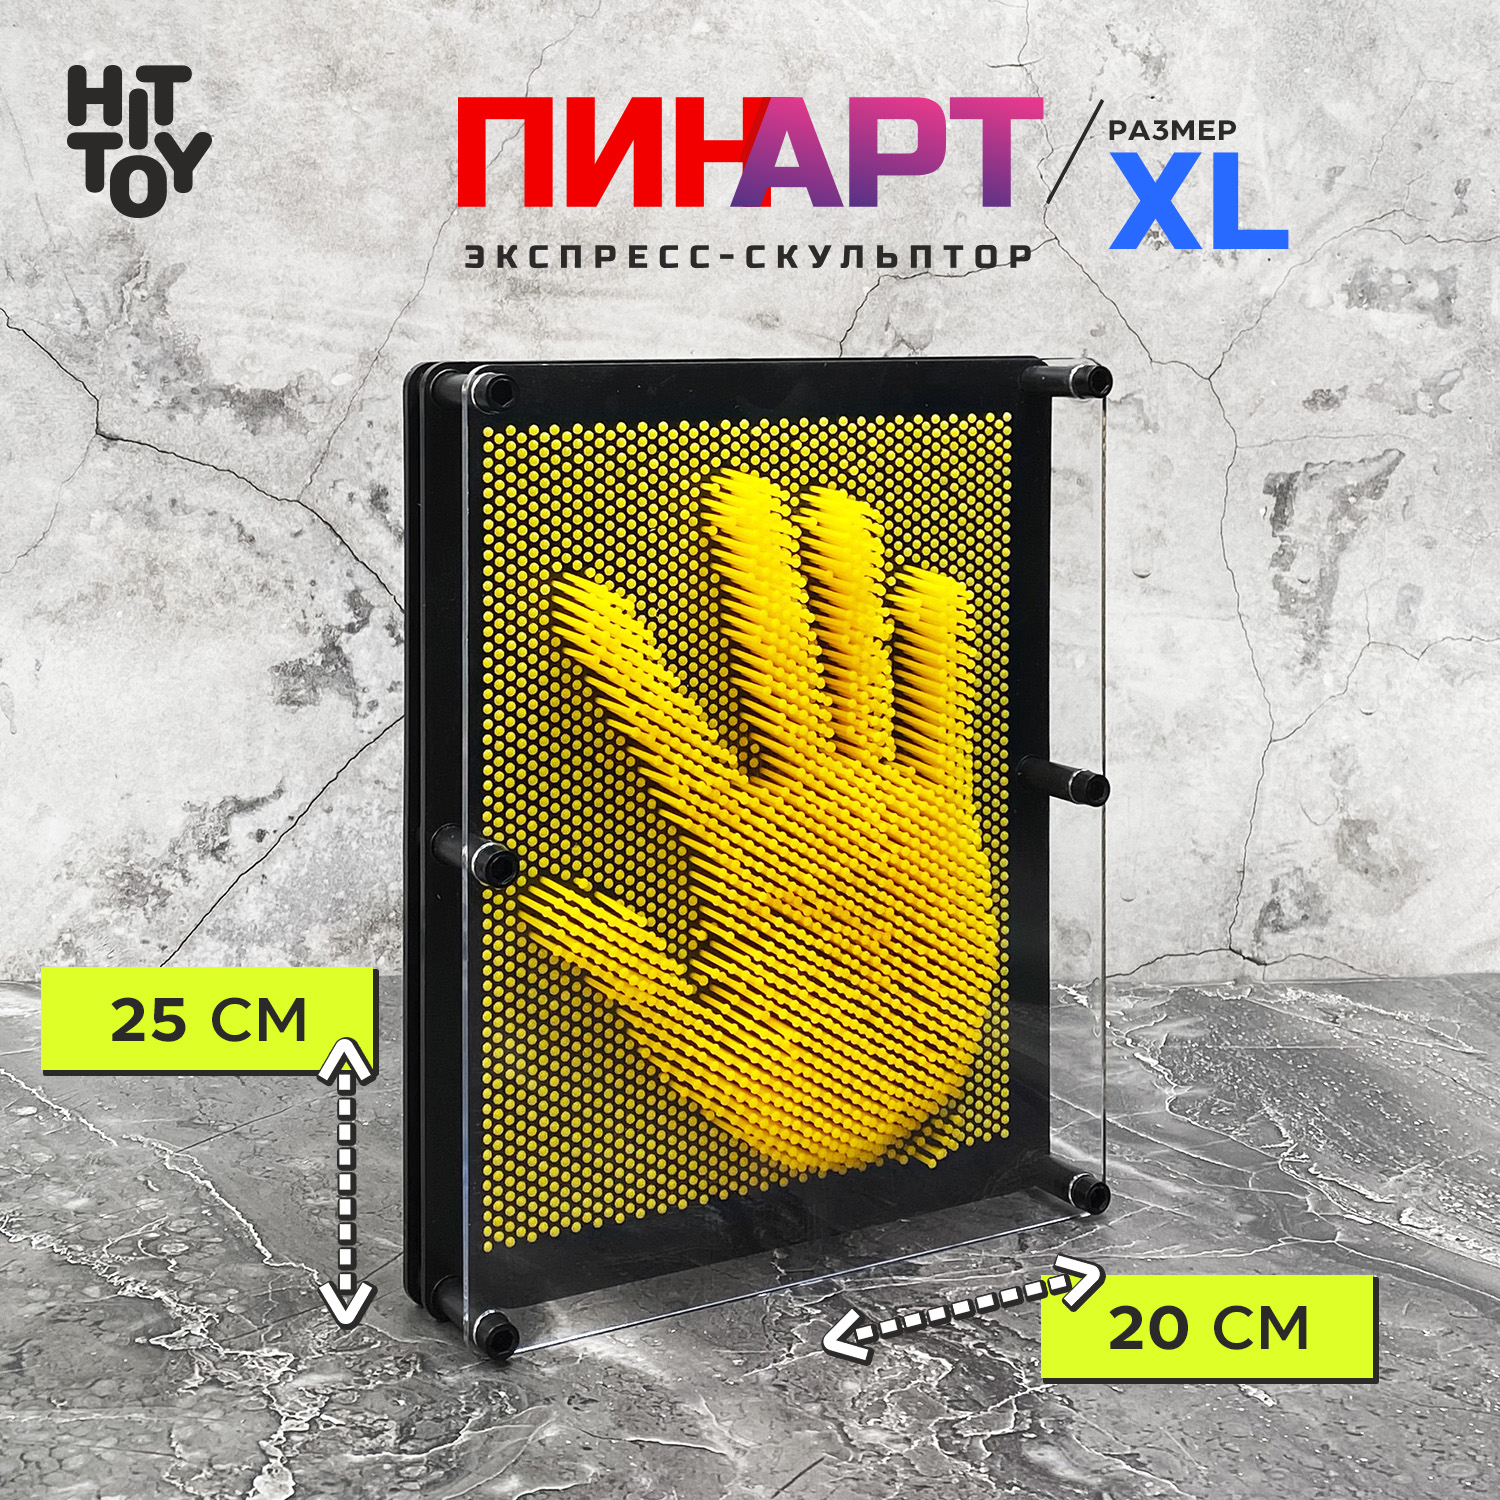 Игрушка-антистресс HitToy Экспресс-скульптор Pinart Классик XL желтый - фото 1